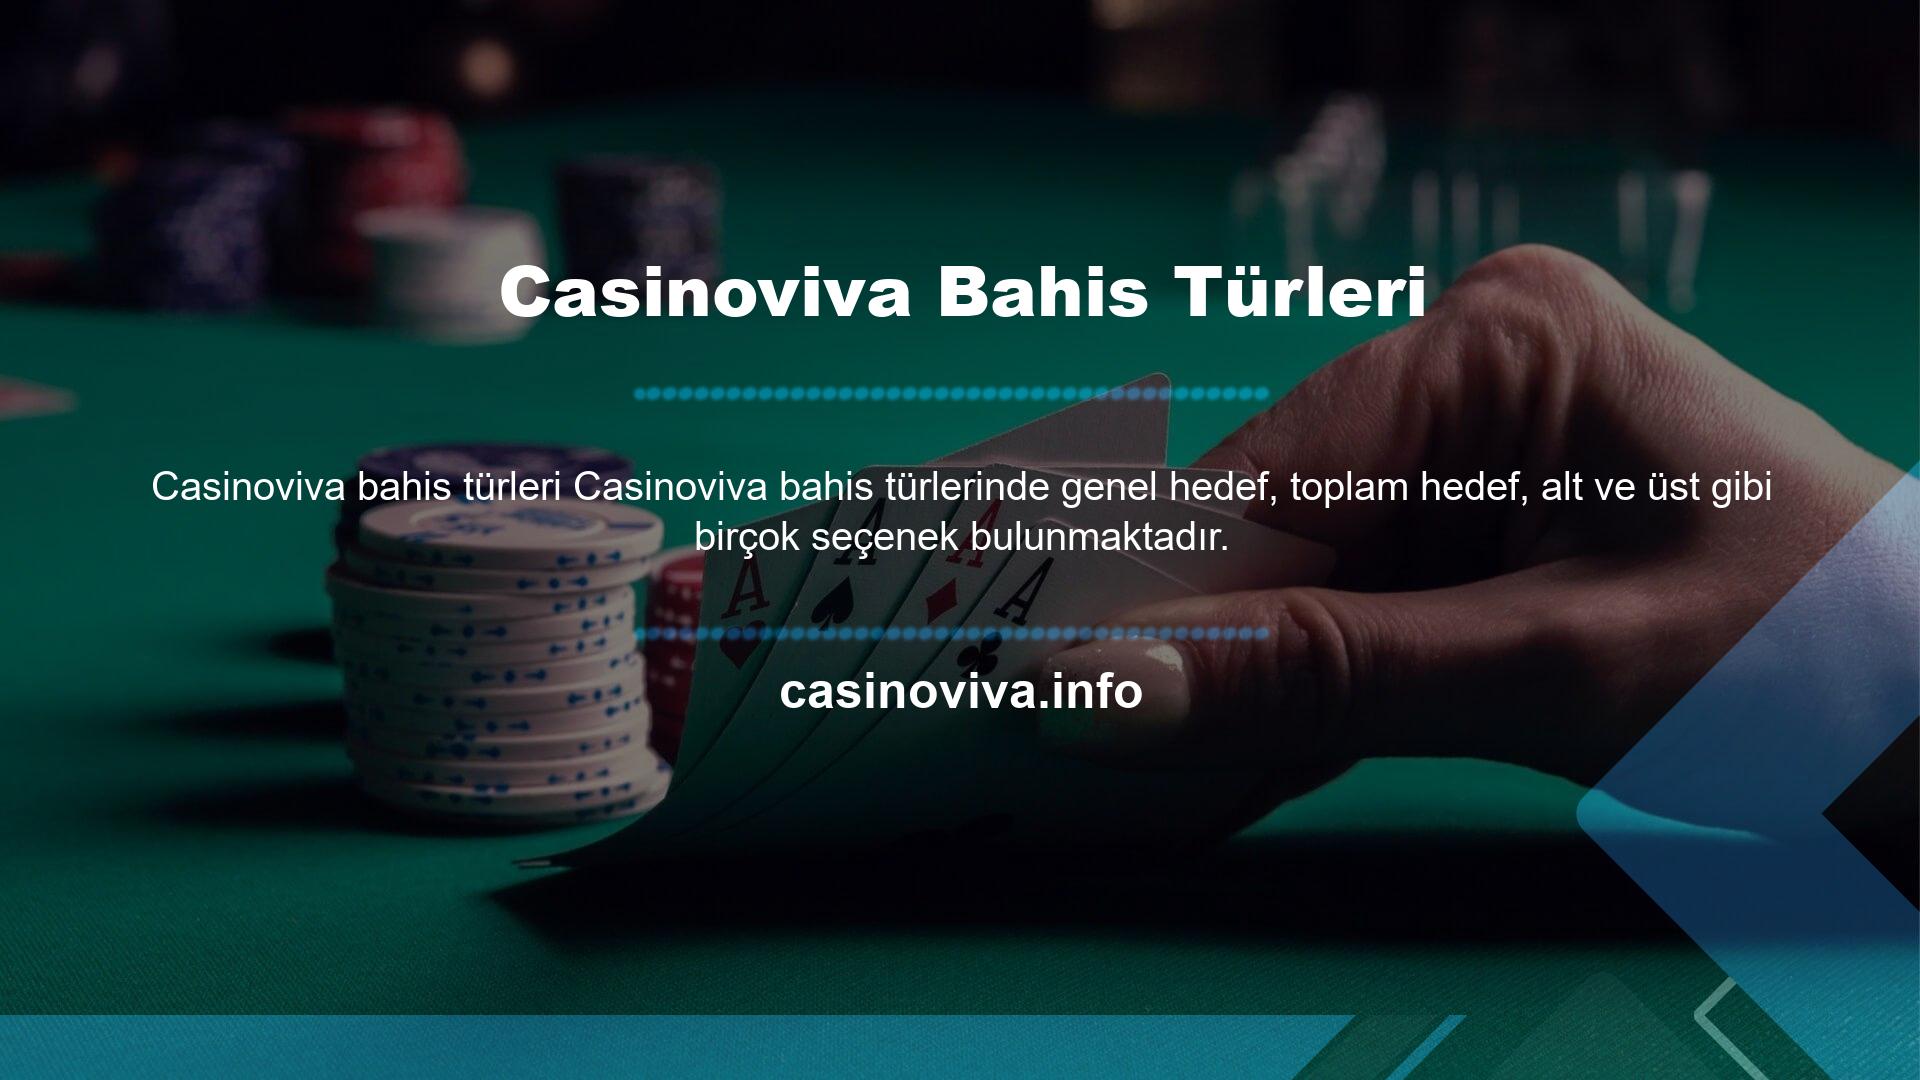 Casinoviva Bahis Türleri